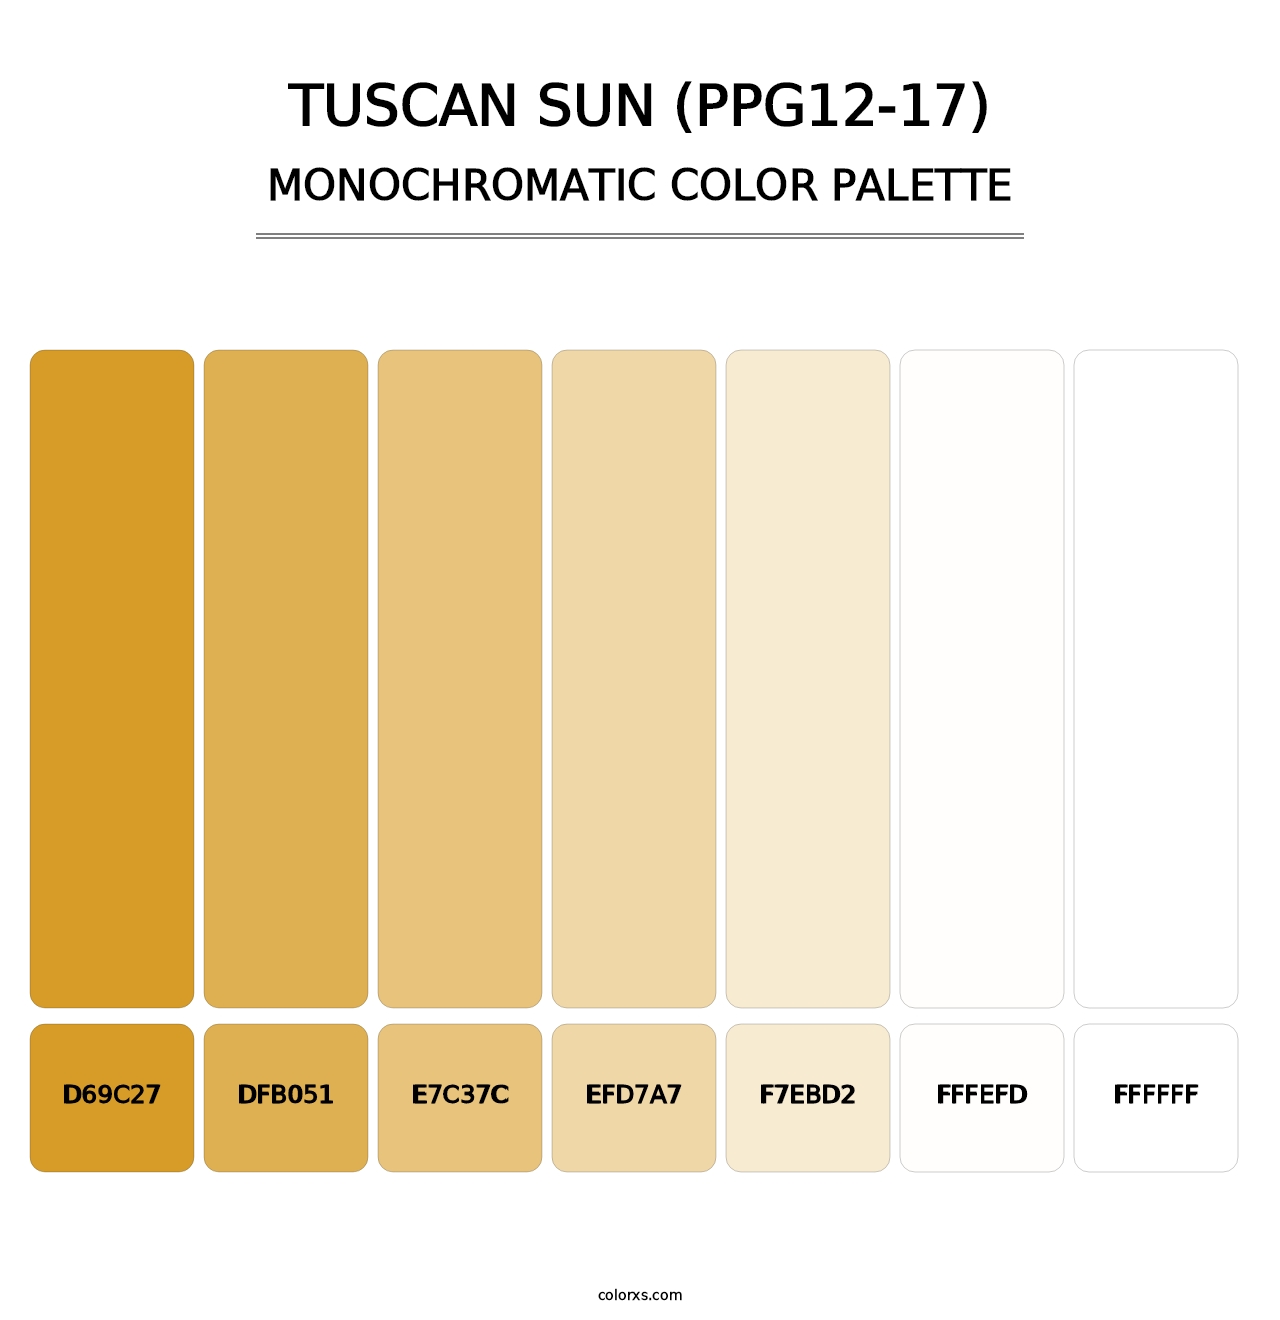 Tuscan Sun (PPG12-17) - Monochromatic Color Palette